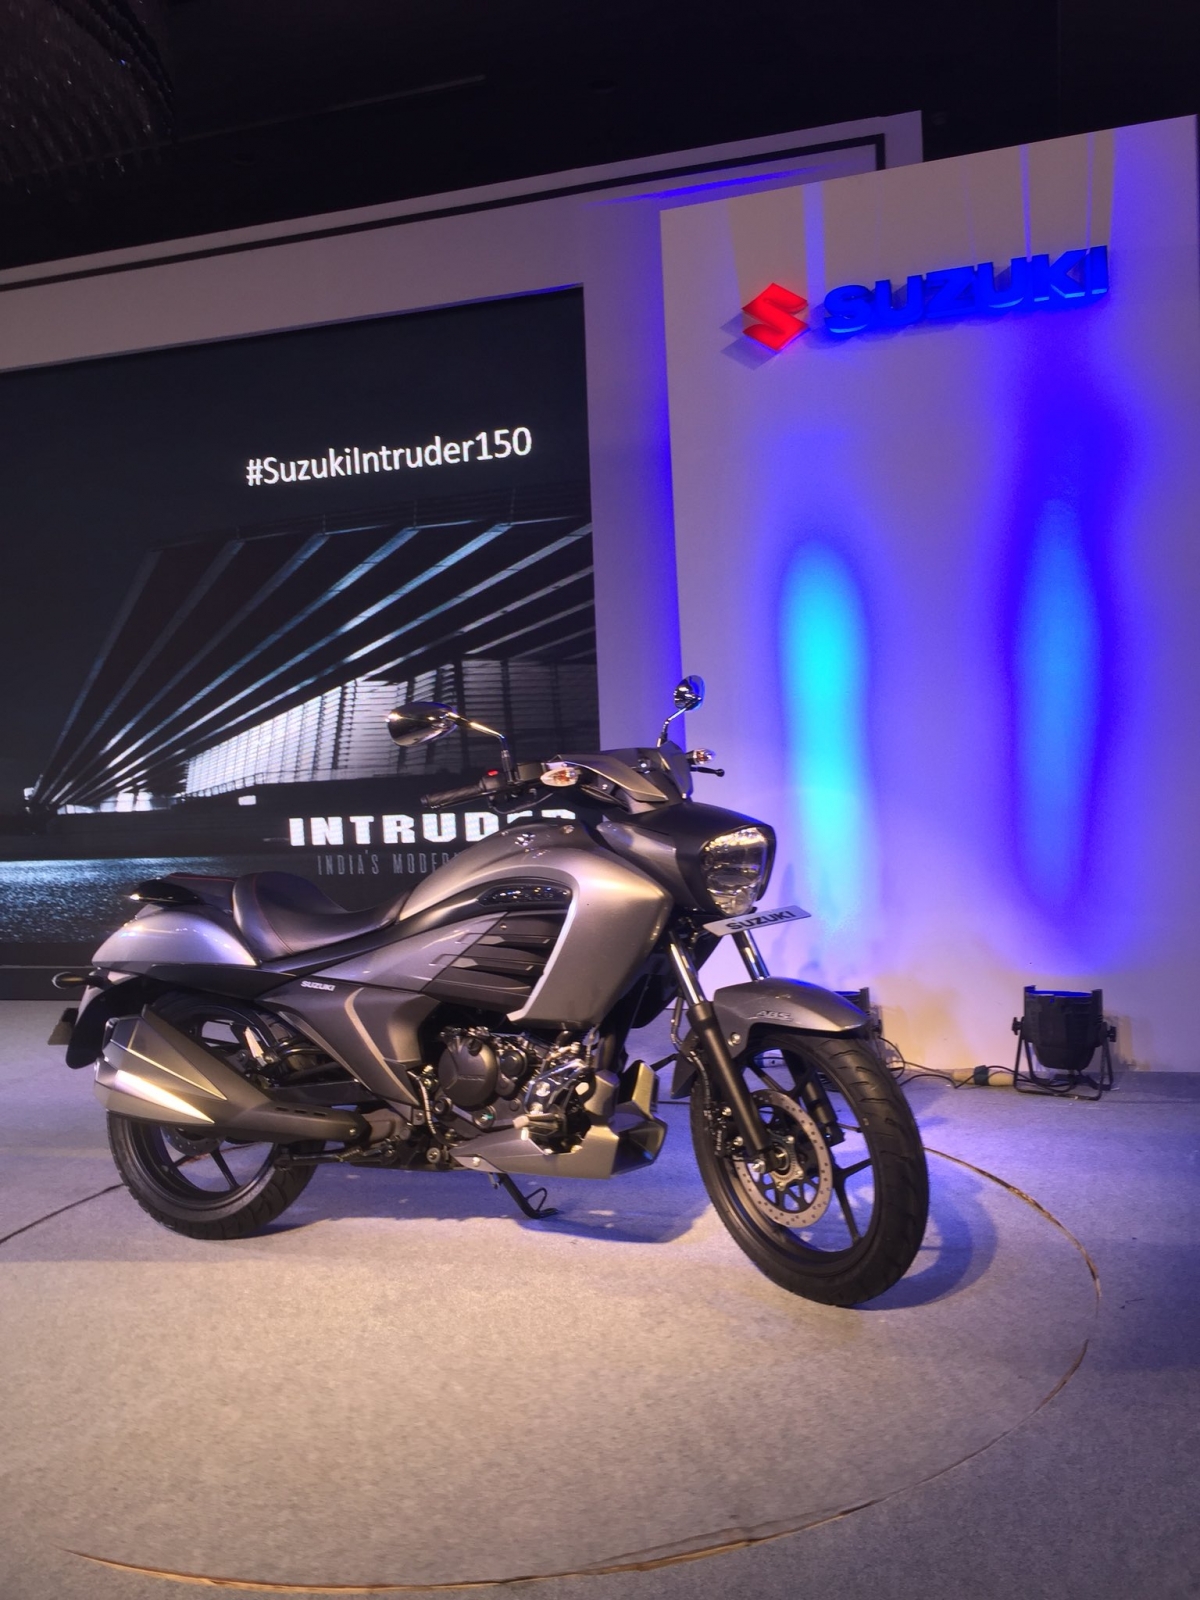 Suzuki Intruder 150 images leaked ahead of launch